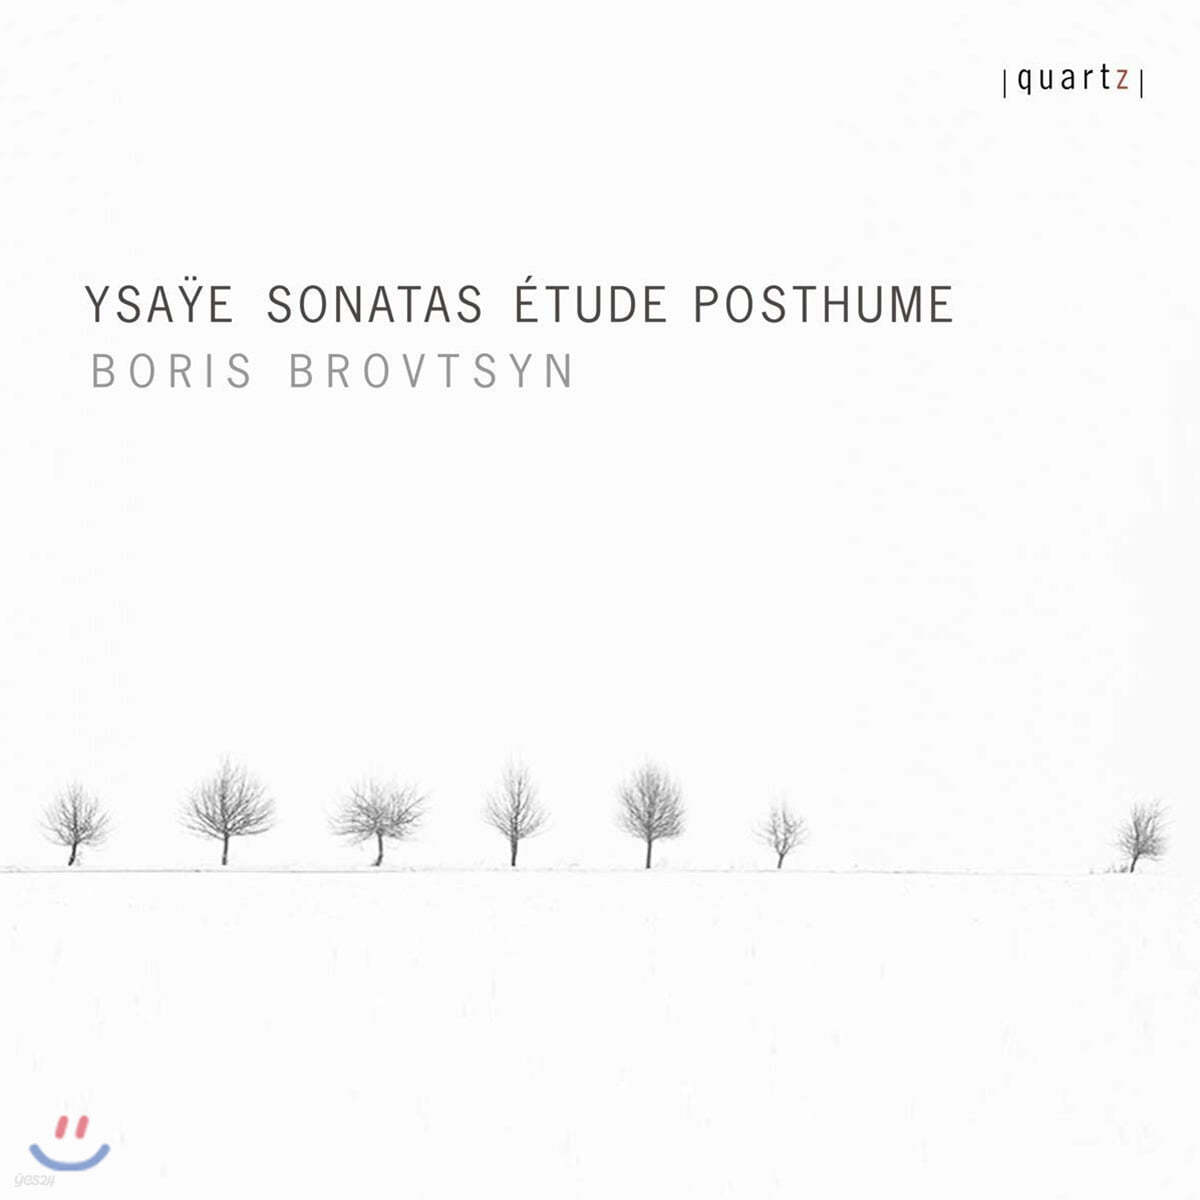 Boris Brovtsyn 이자이: 무반주 바이올린 소나타 전곡집 - 보리스 브로프친 (Ysaye: Sonatas, Etude posthume)